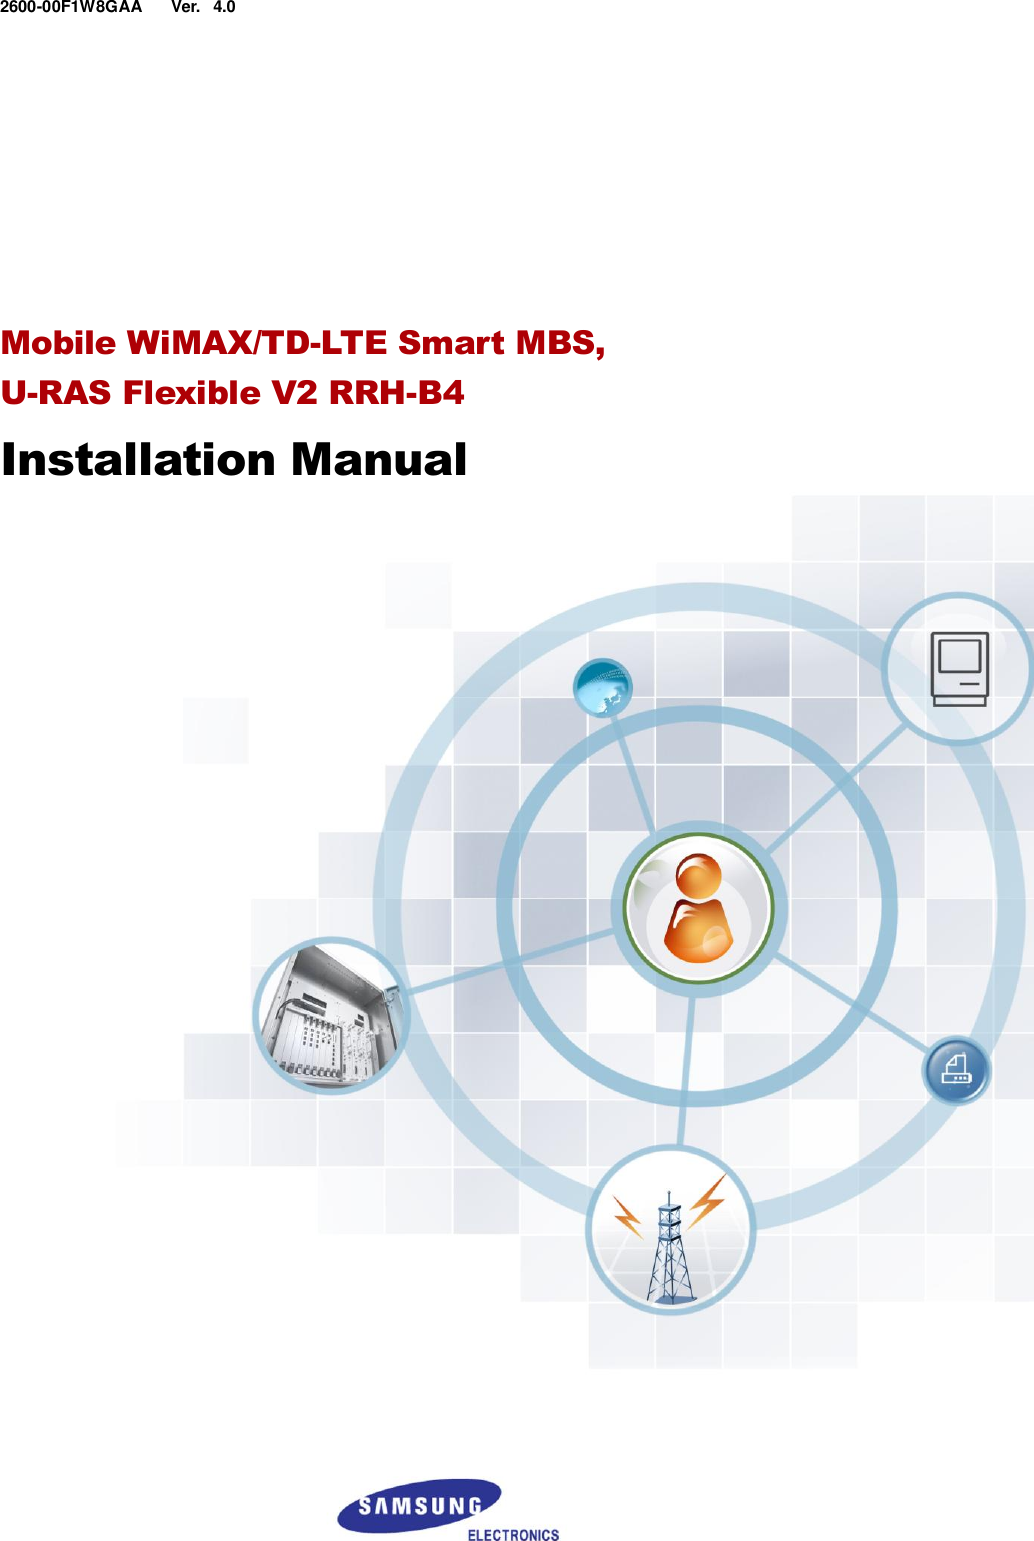  Ver.    2600-00F1W8GAA 4.0        Mobile WiMAX/TD-LTE Smart MBS,   U-RAS Flexible V2 RRH-B4 Installation Manual    